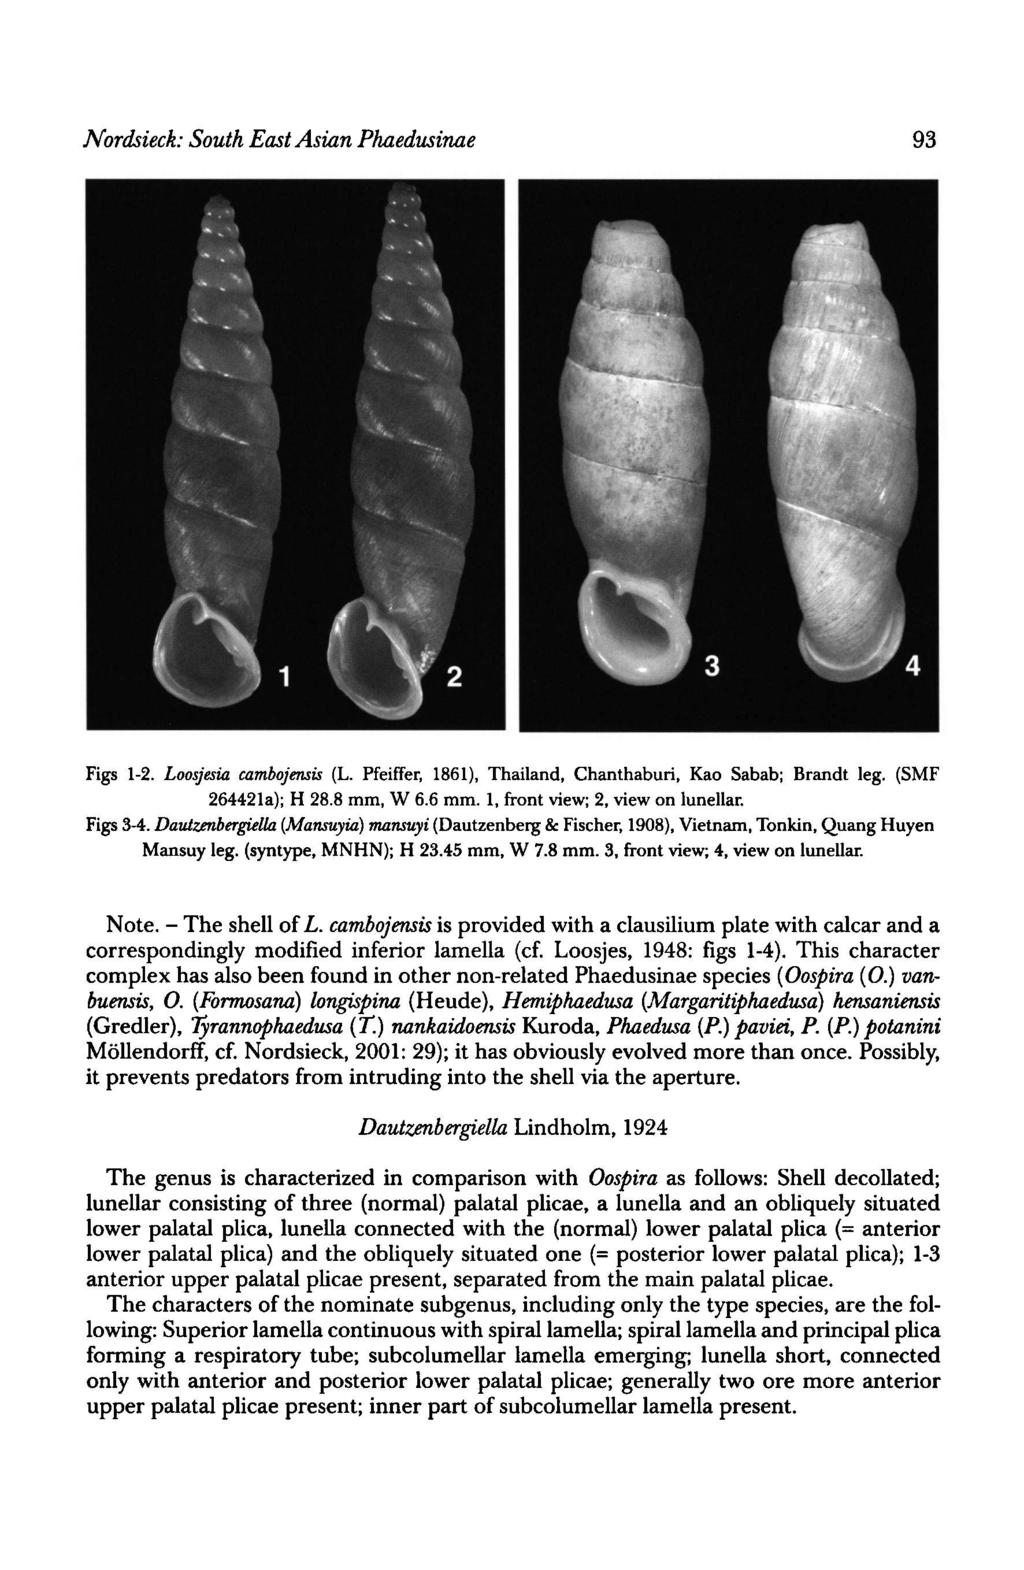 The Nordsieck: South East Asian Phaedusinae 93 Figs 12. Loosjesia cambojensis (L. Pfeiffer, 1861), Thailand, Chanthaburi, Kao Sabab; Brandt leg. (SMF 264421a); H 28.8 mm, W 6.6 mm.